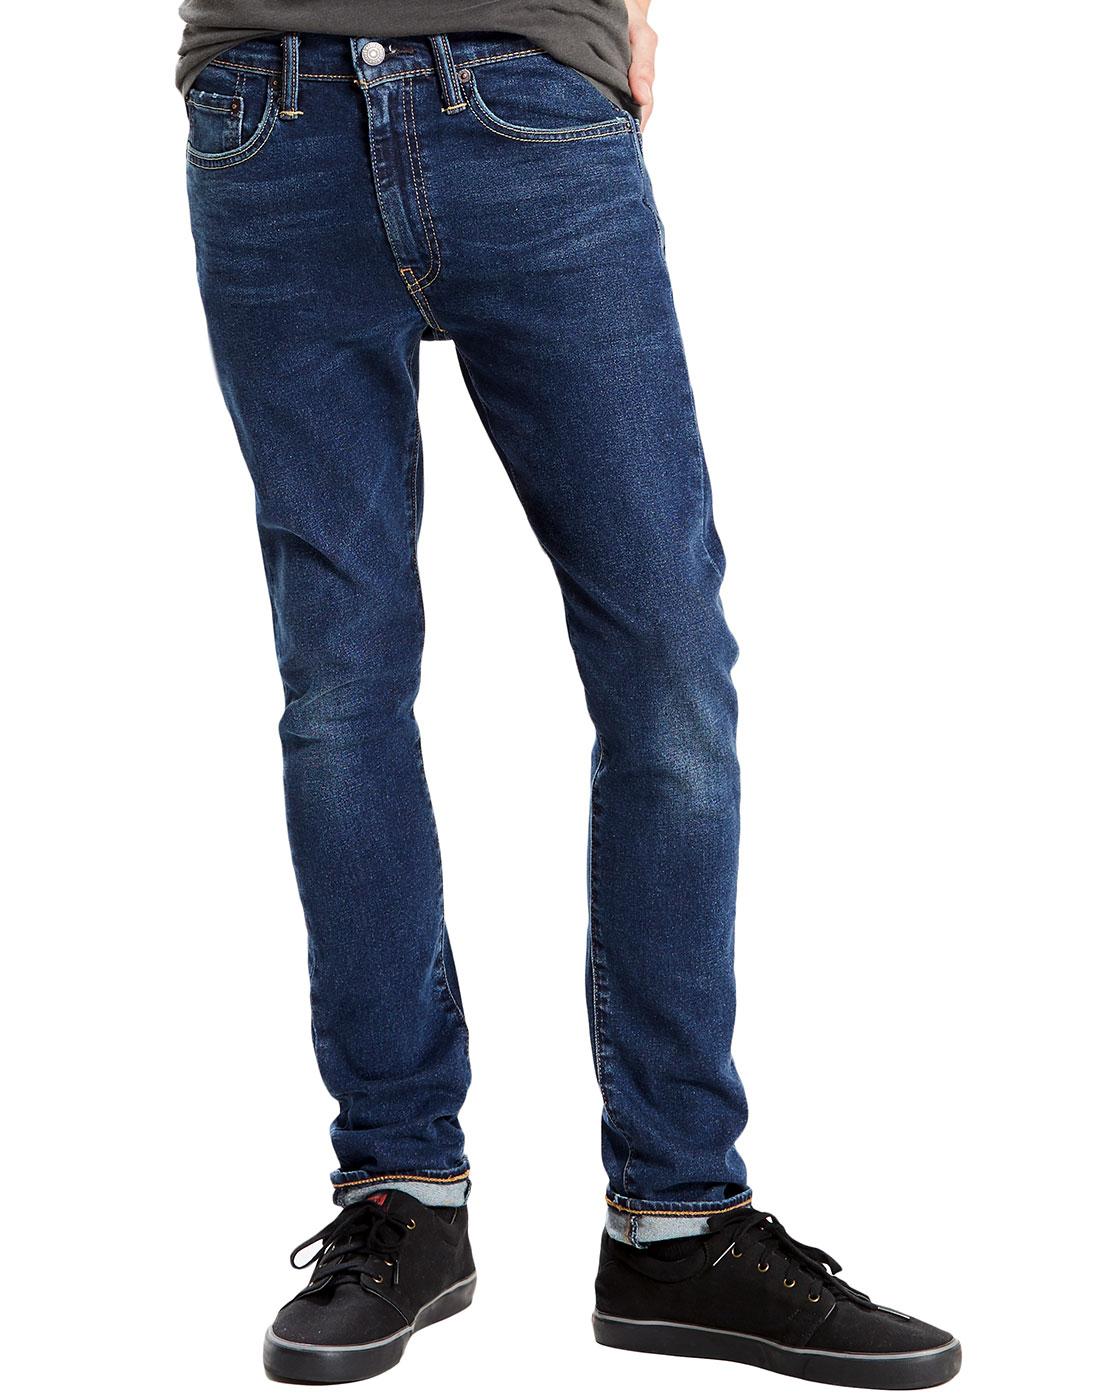 LEVI'S® 519 Retro Mod Extreme Skinny Fit Denim Jeans in Gritt 519